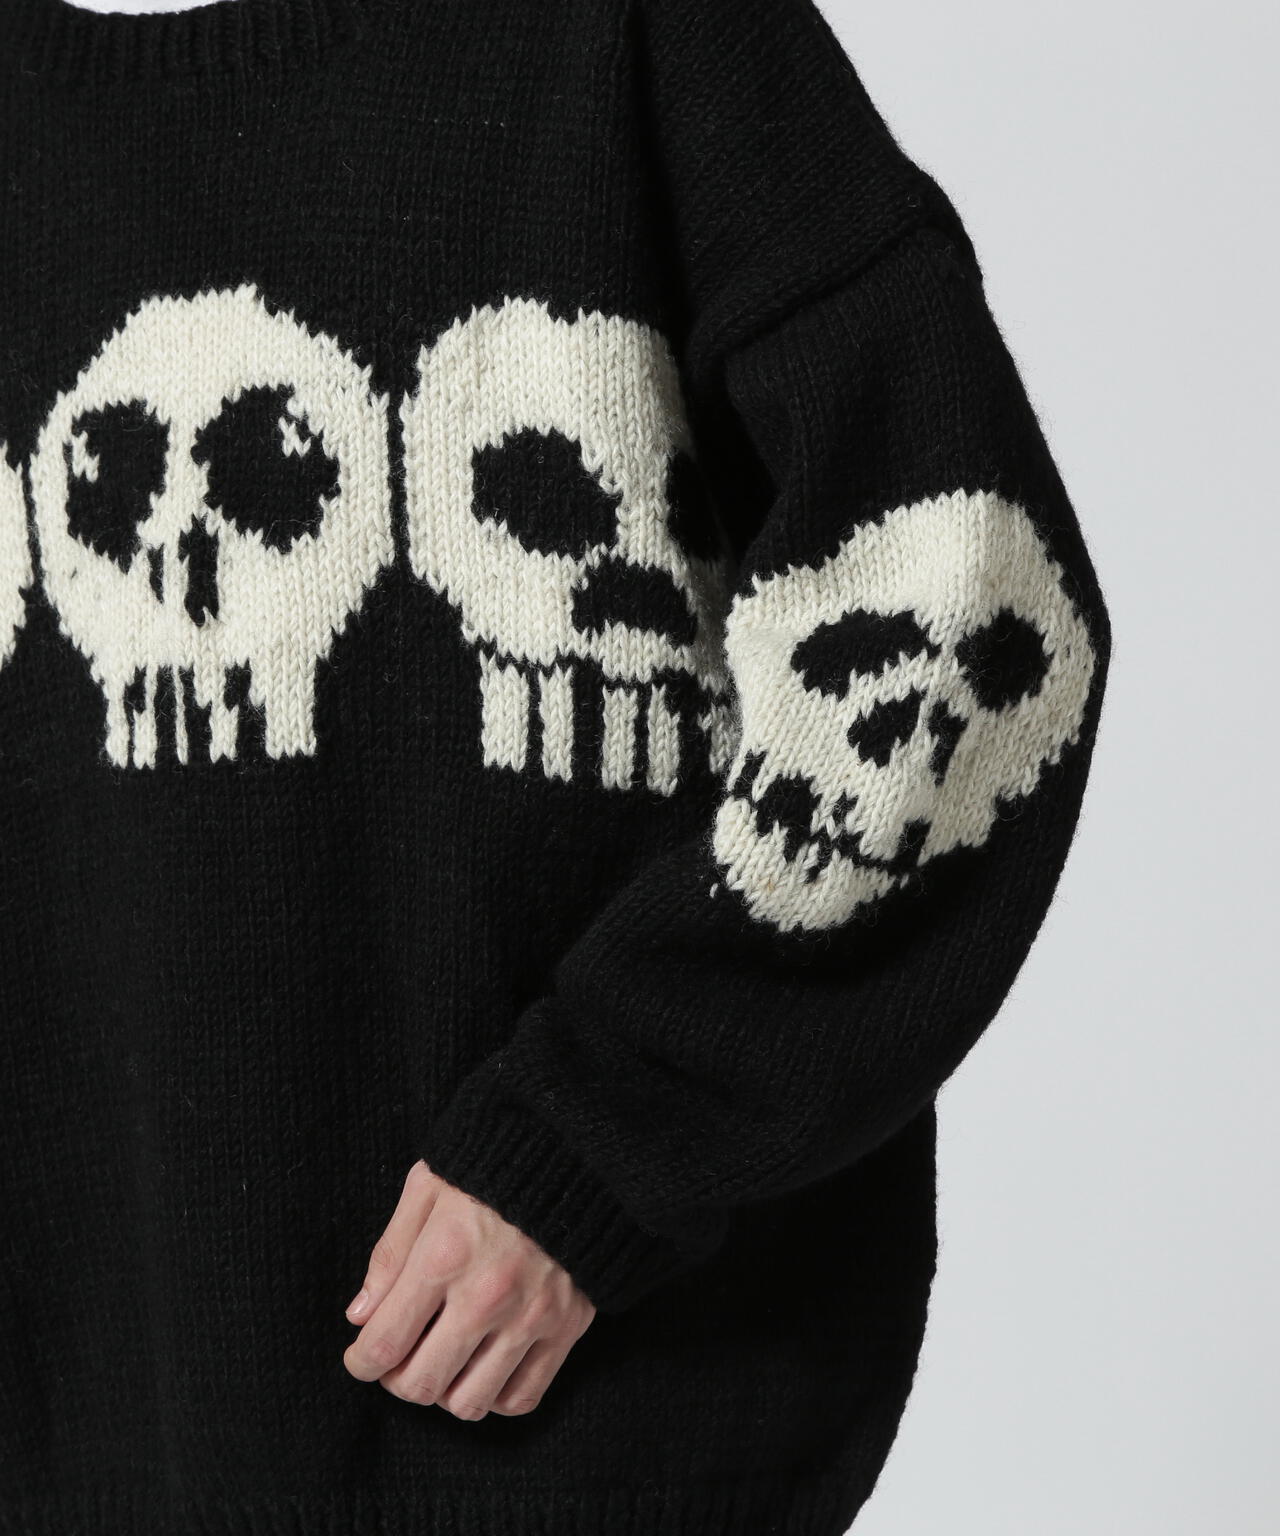 MacMahon Knitting Mills/Crew Neck Knit-Line Skulls | B'2nd ( ビー